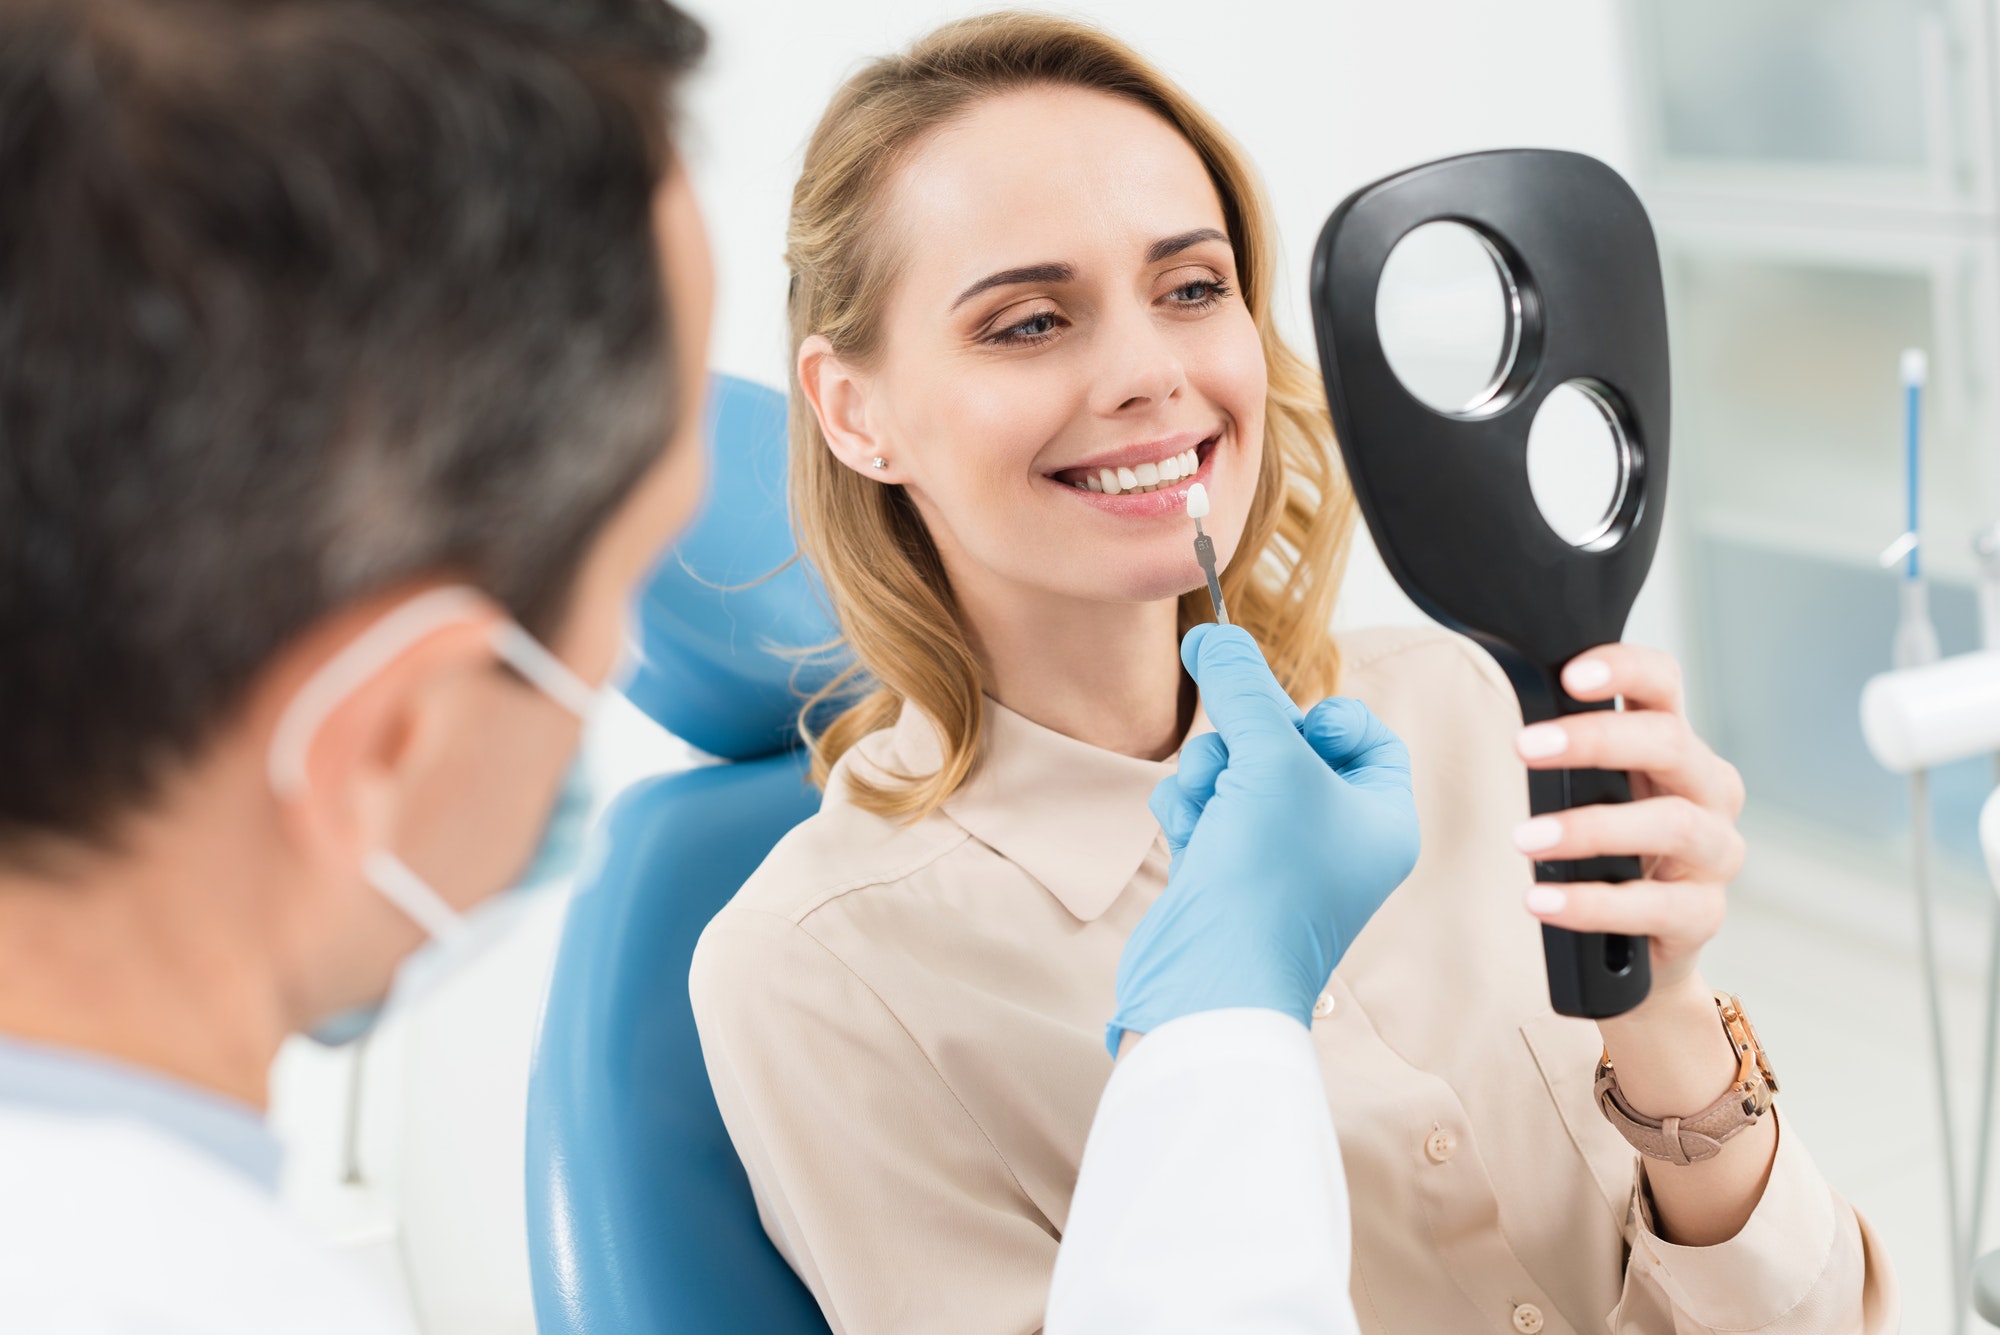 female-patient-choosing-tooth-implant-looking-at-mirror-in-modern-dental-clinic.jpg